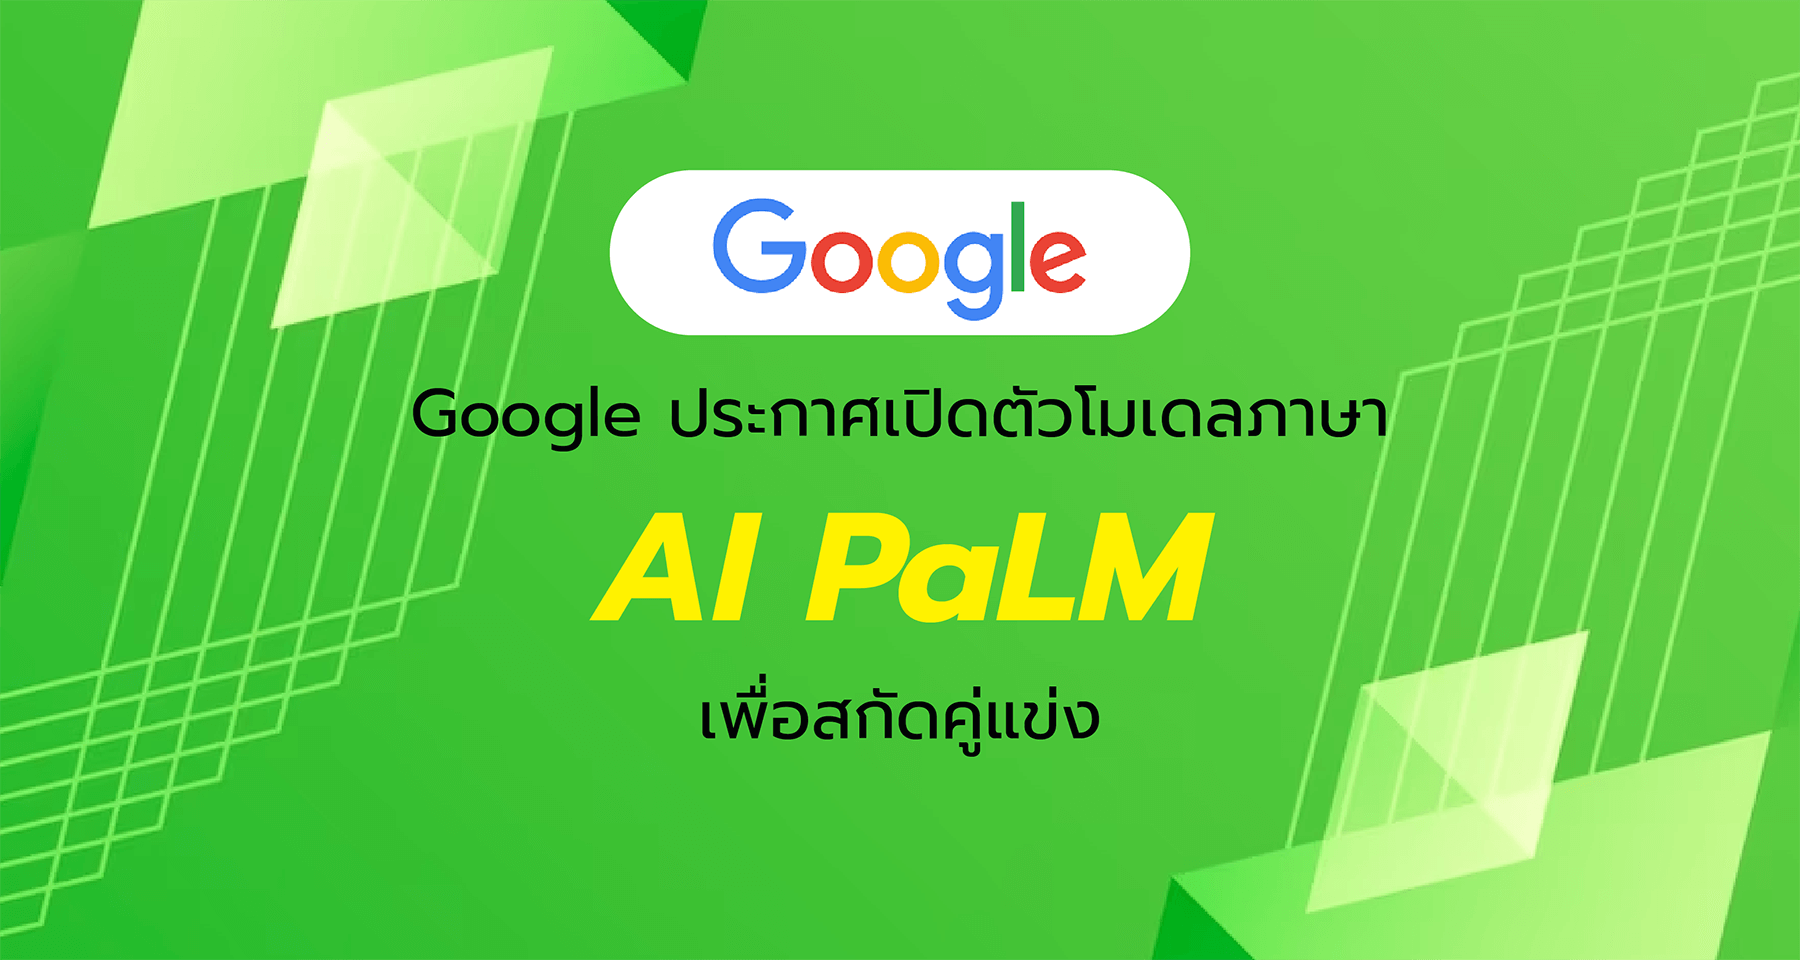 Google ประกาศเปิดตัวโมเดลภาษา AI PaLM เพื่อสกัดคู่แข่ง